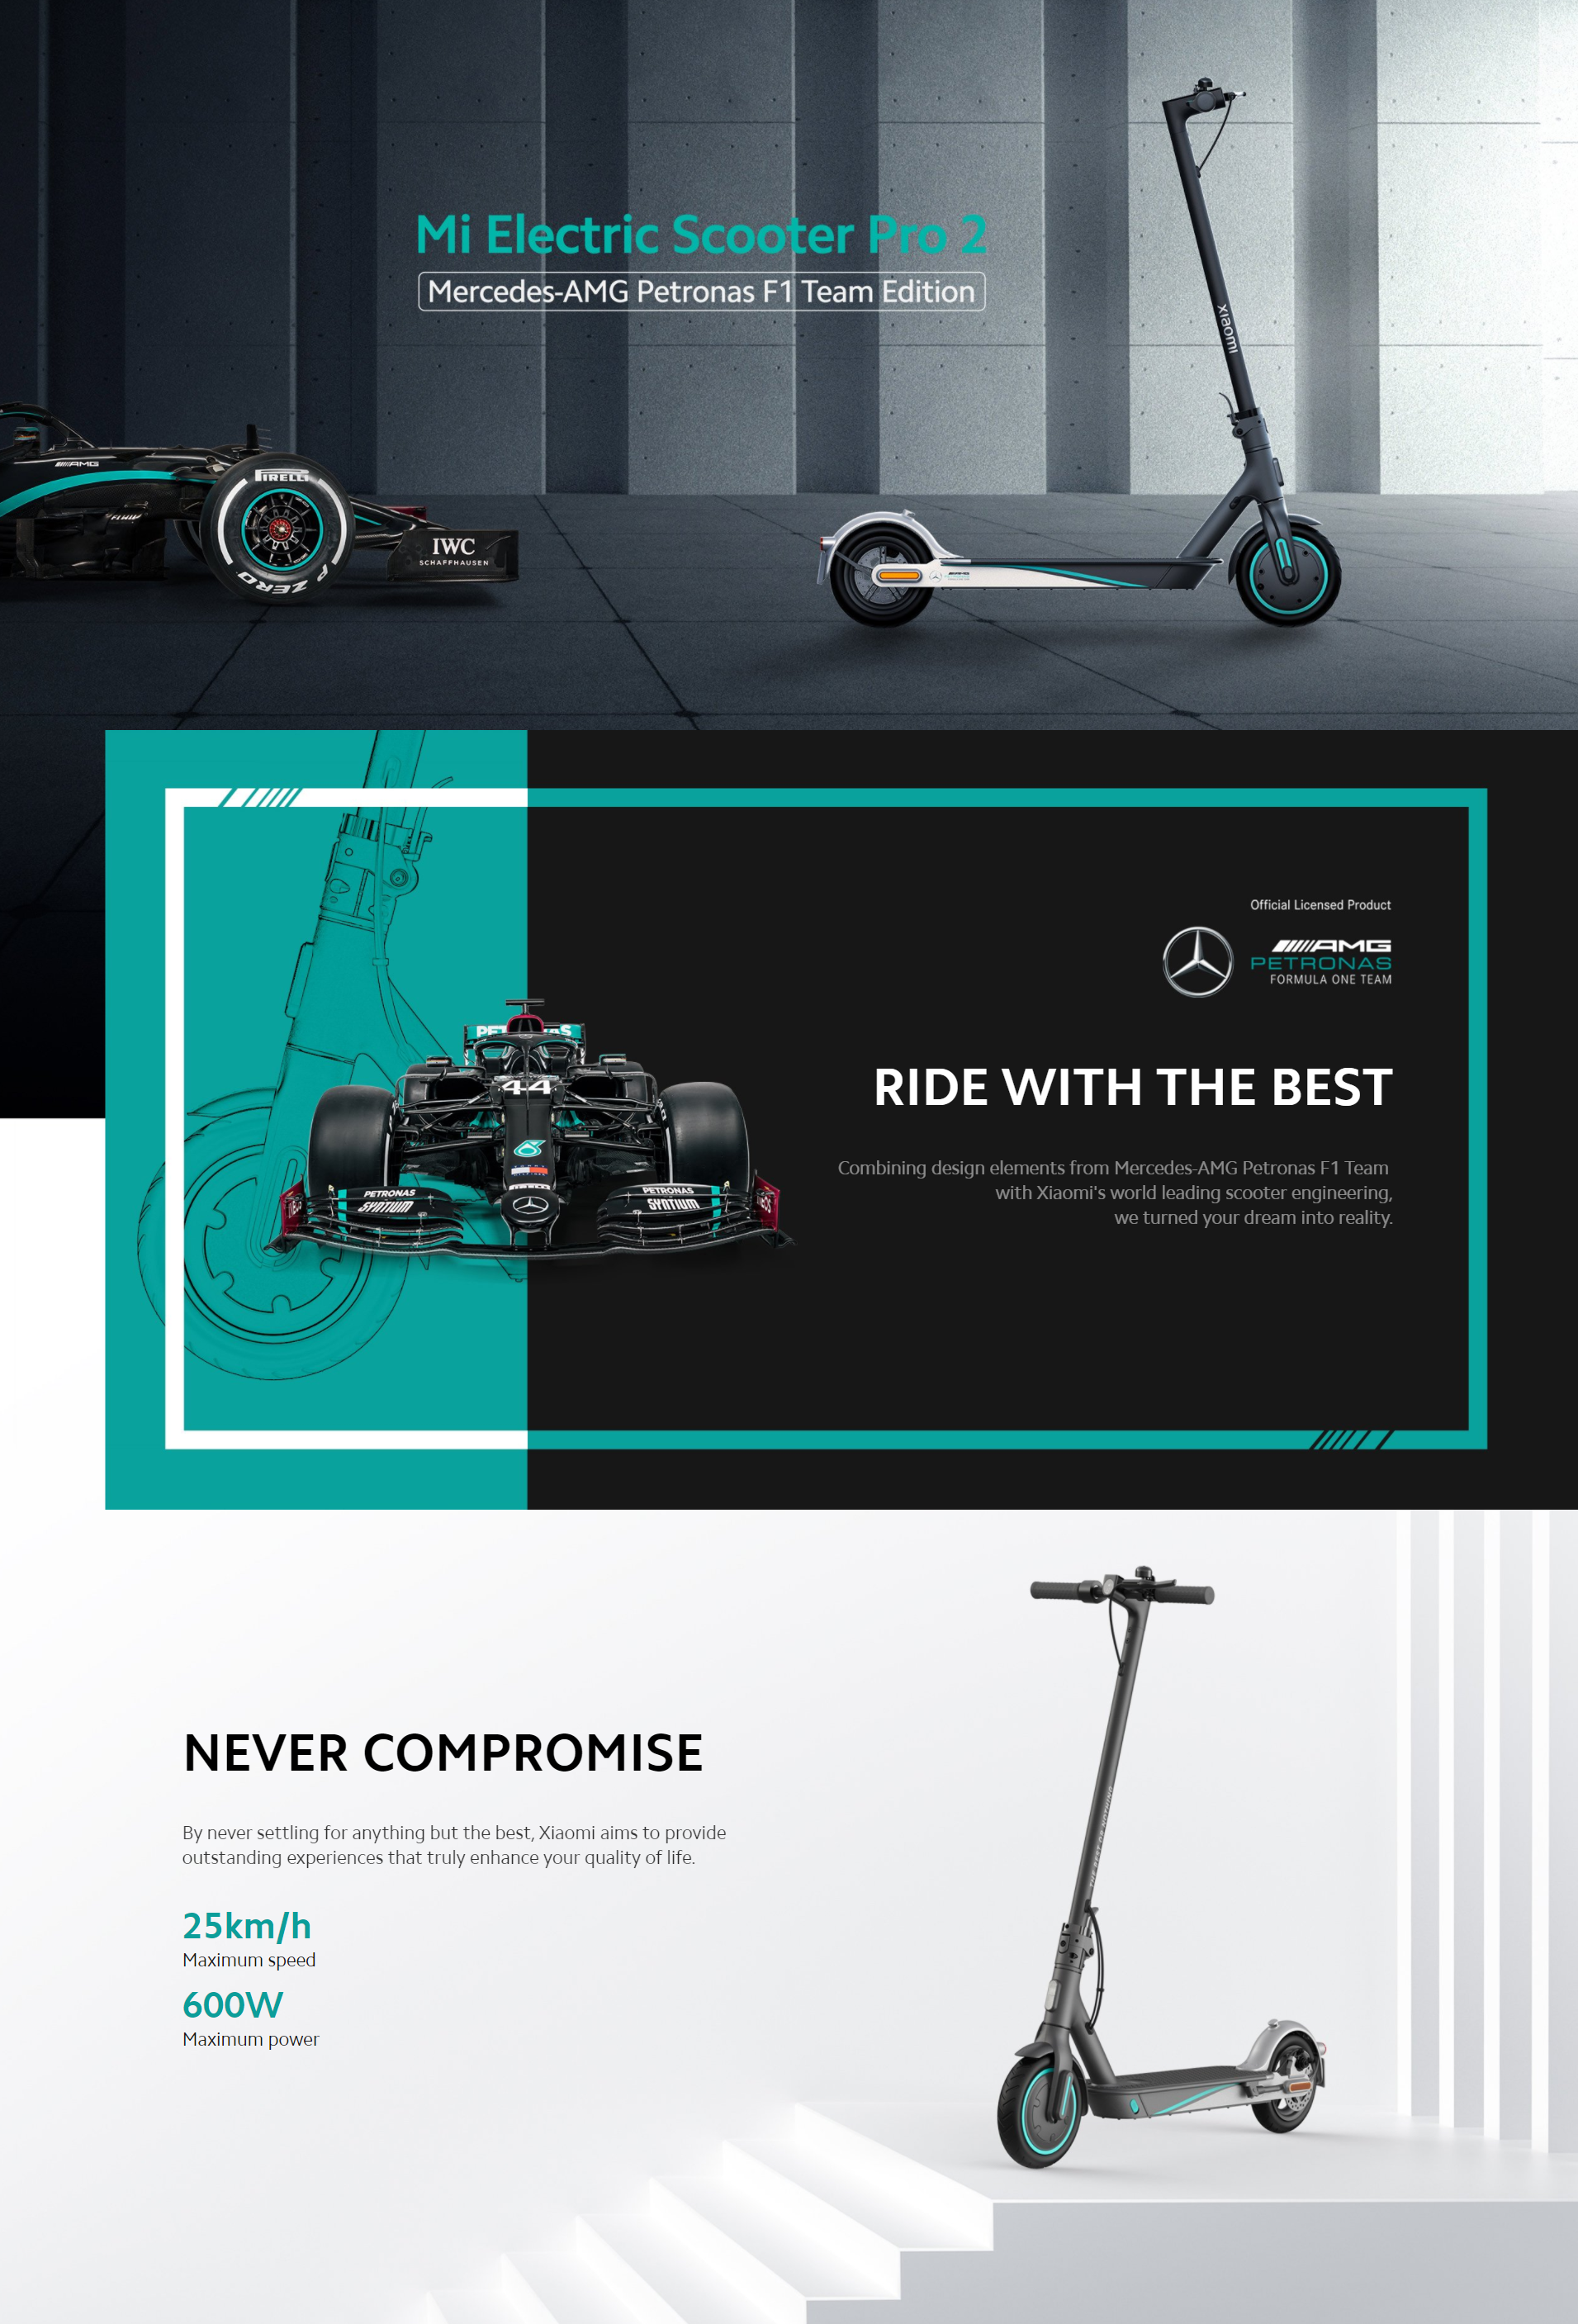 Comprar Xiaomi Mi Electric Scooter Pro 2 Mercedes AMG